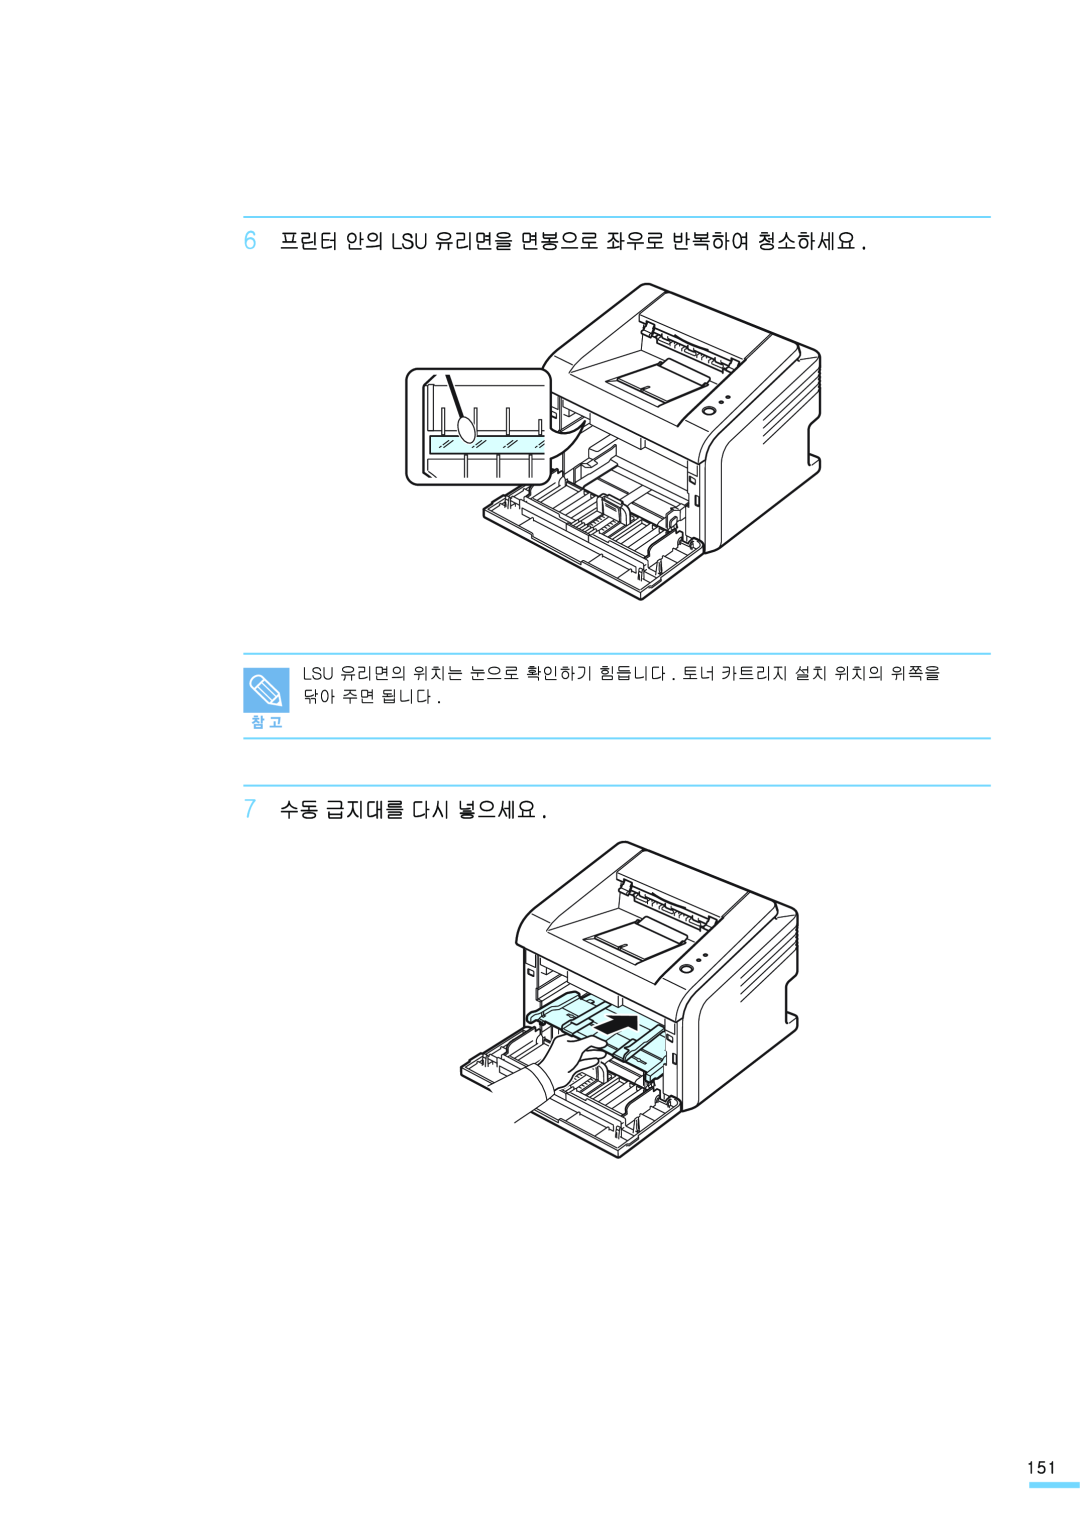 Samsung ML-2571N manual 6 프린터 안의 LSU 유리면을 면봉으로 좌우로 반복하여 청소하세요, 7 수동 급지대를 다시 넣으세요 